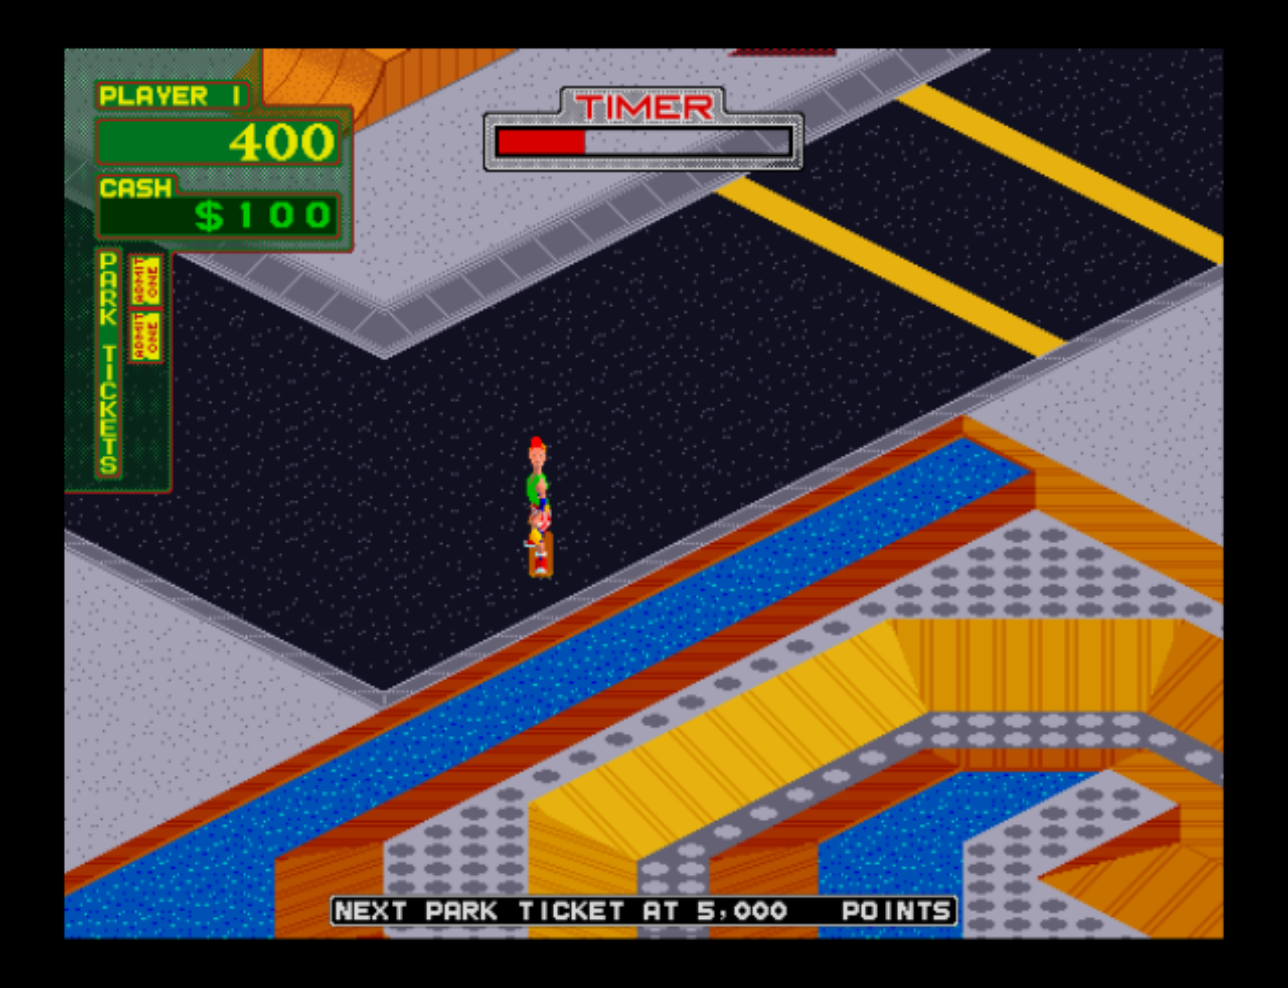 Midway Arcade Treasures gameplay image 14.png